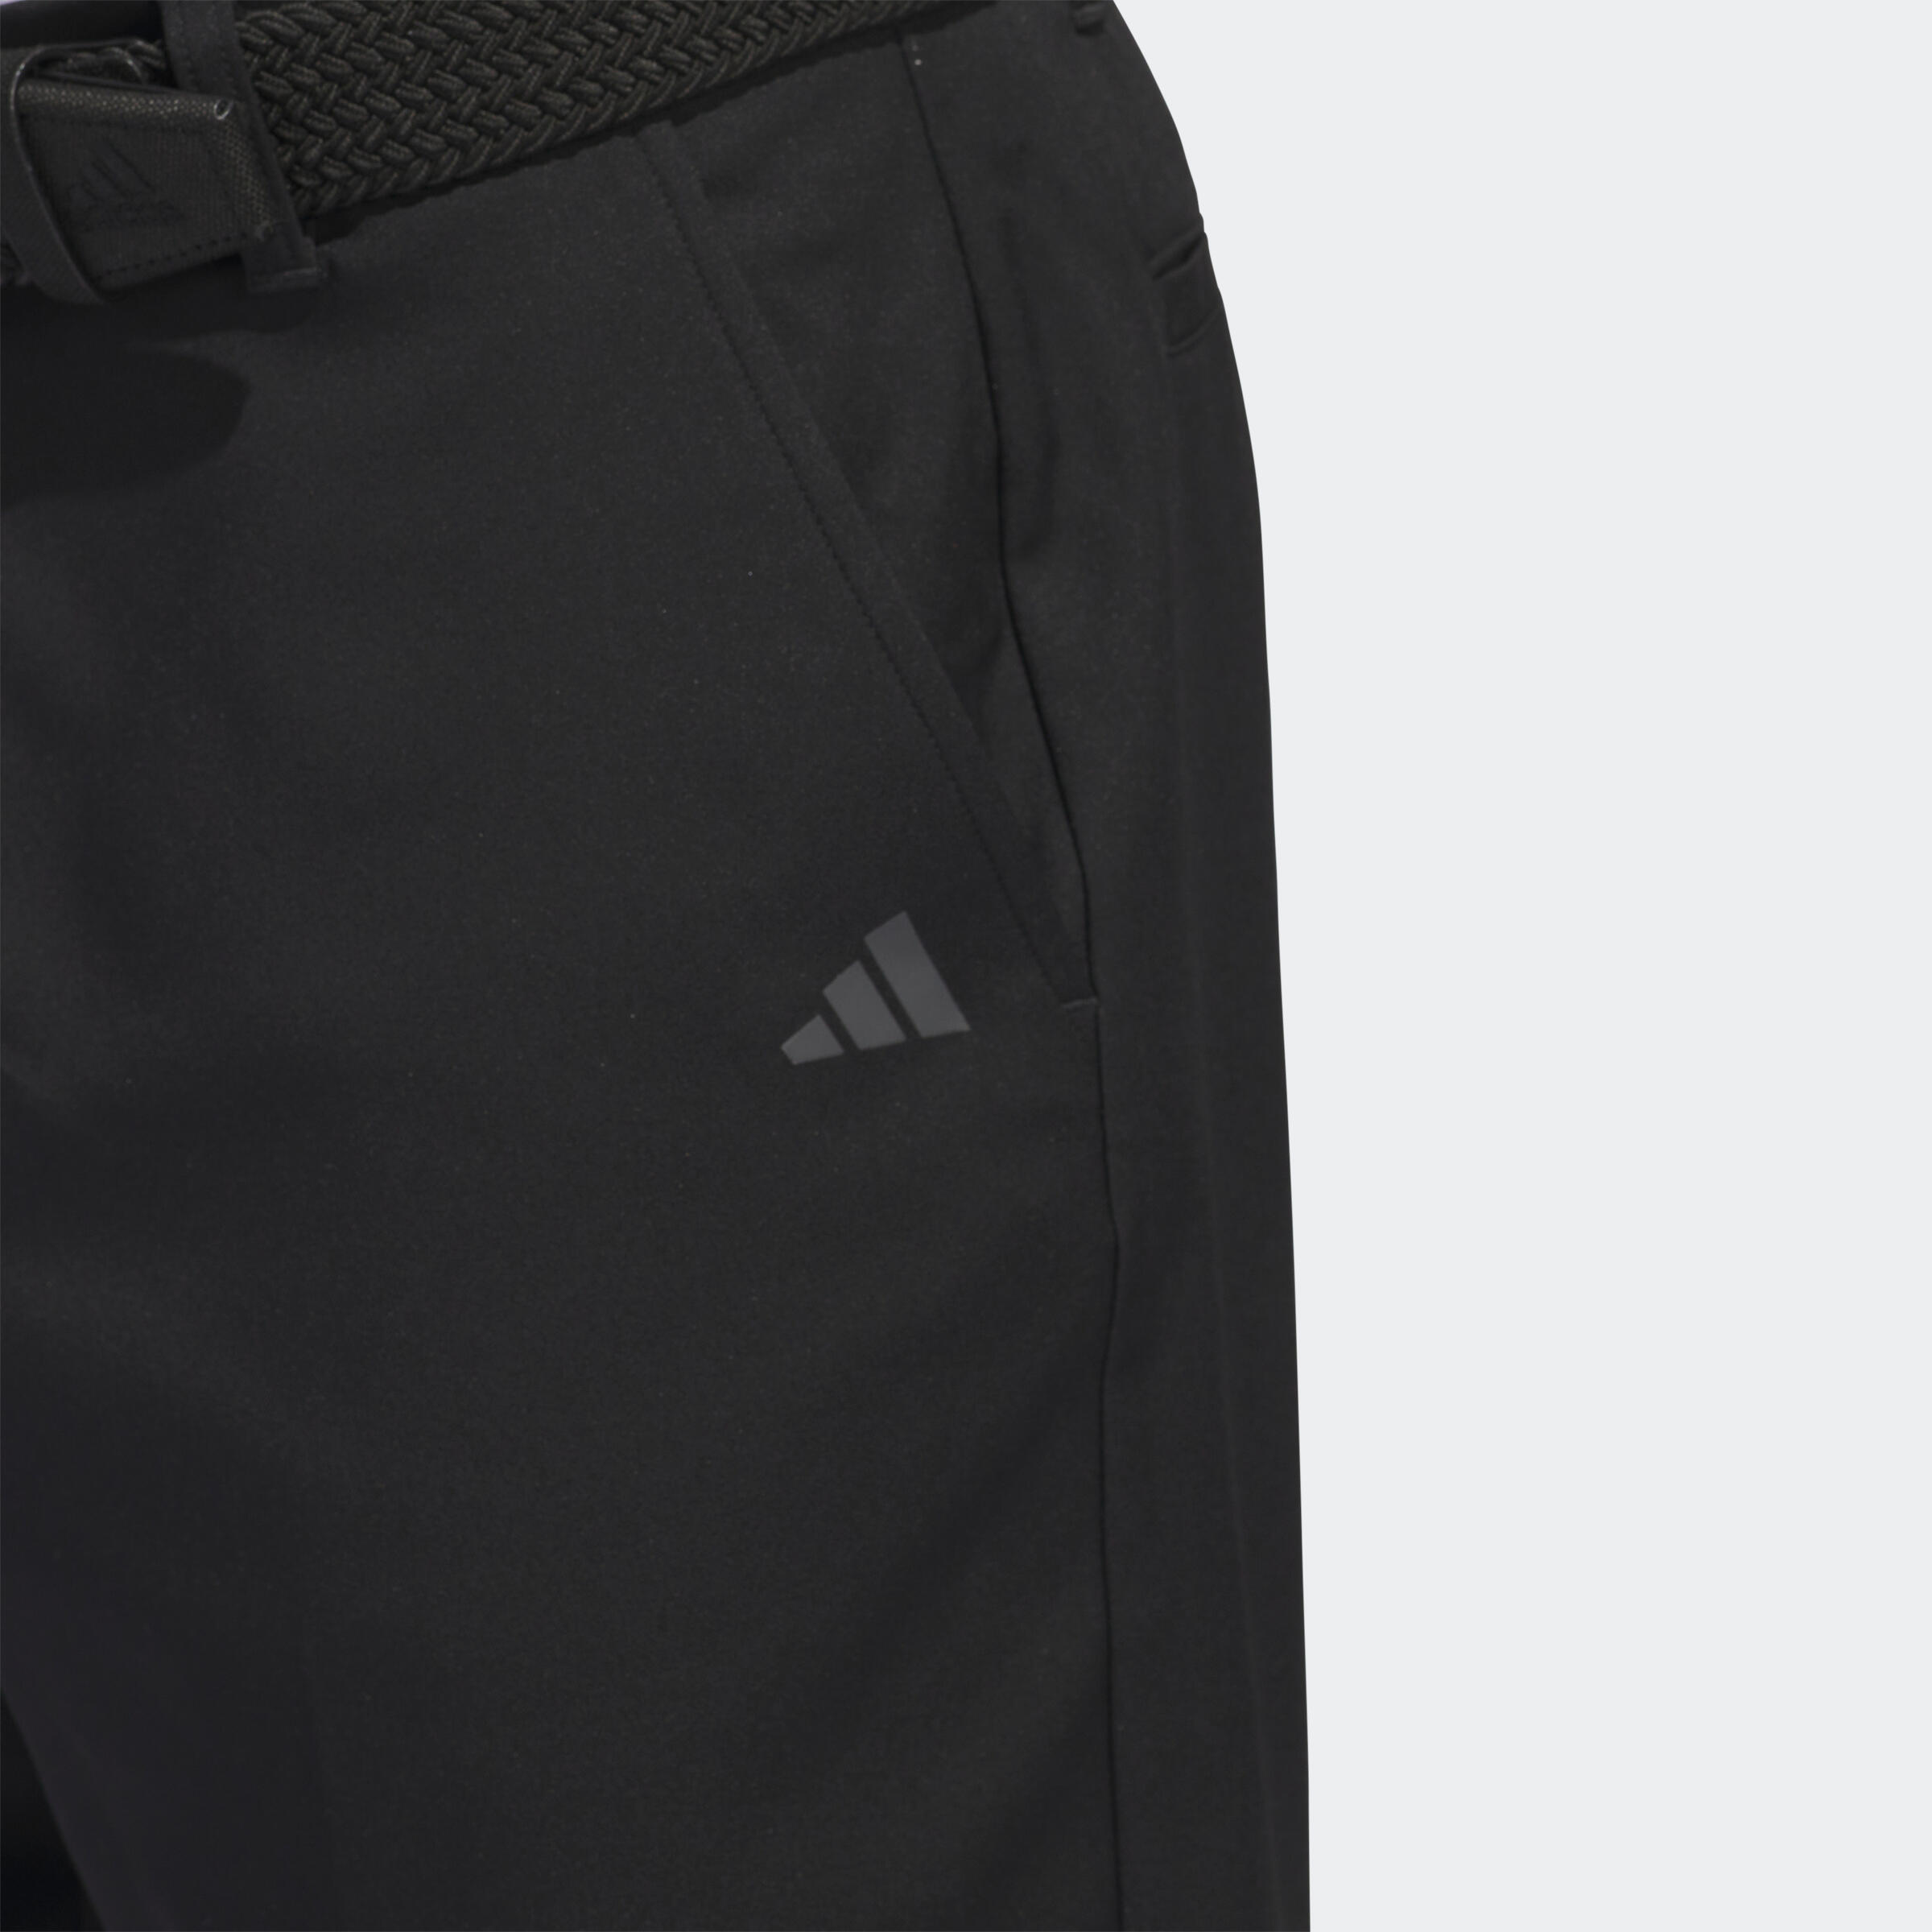 Men's Bermuda Shorts - Adidas - Black 5/5